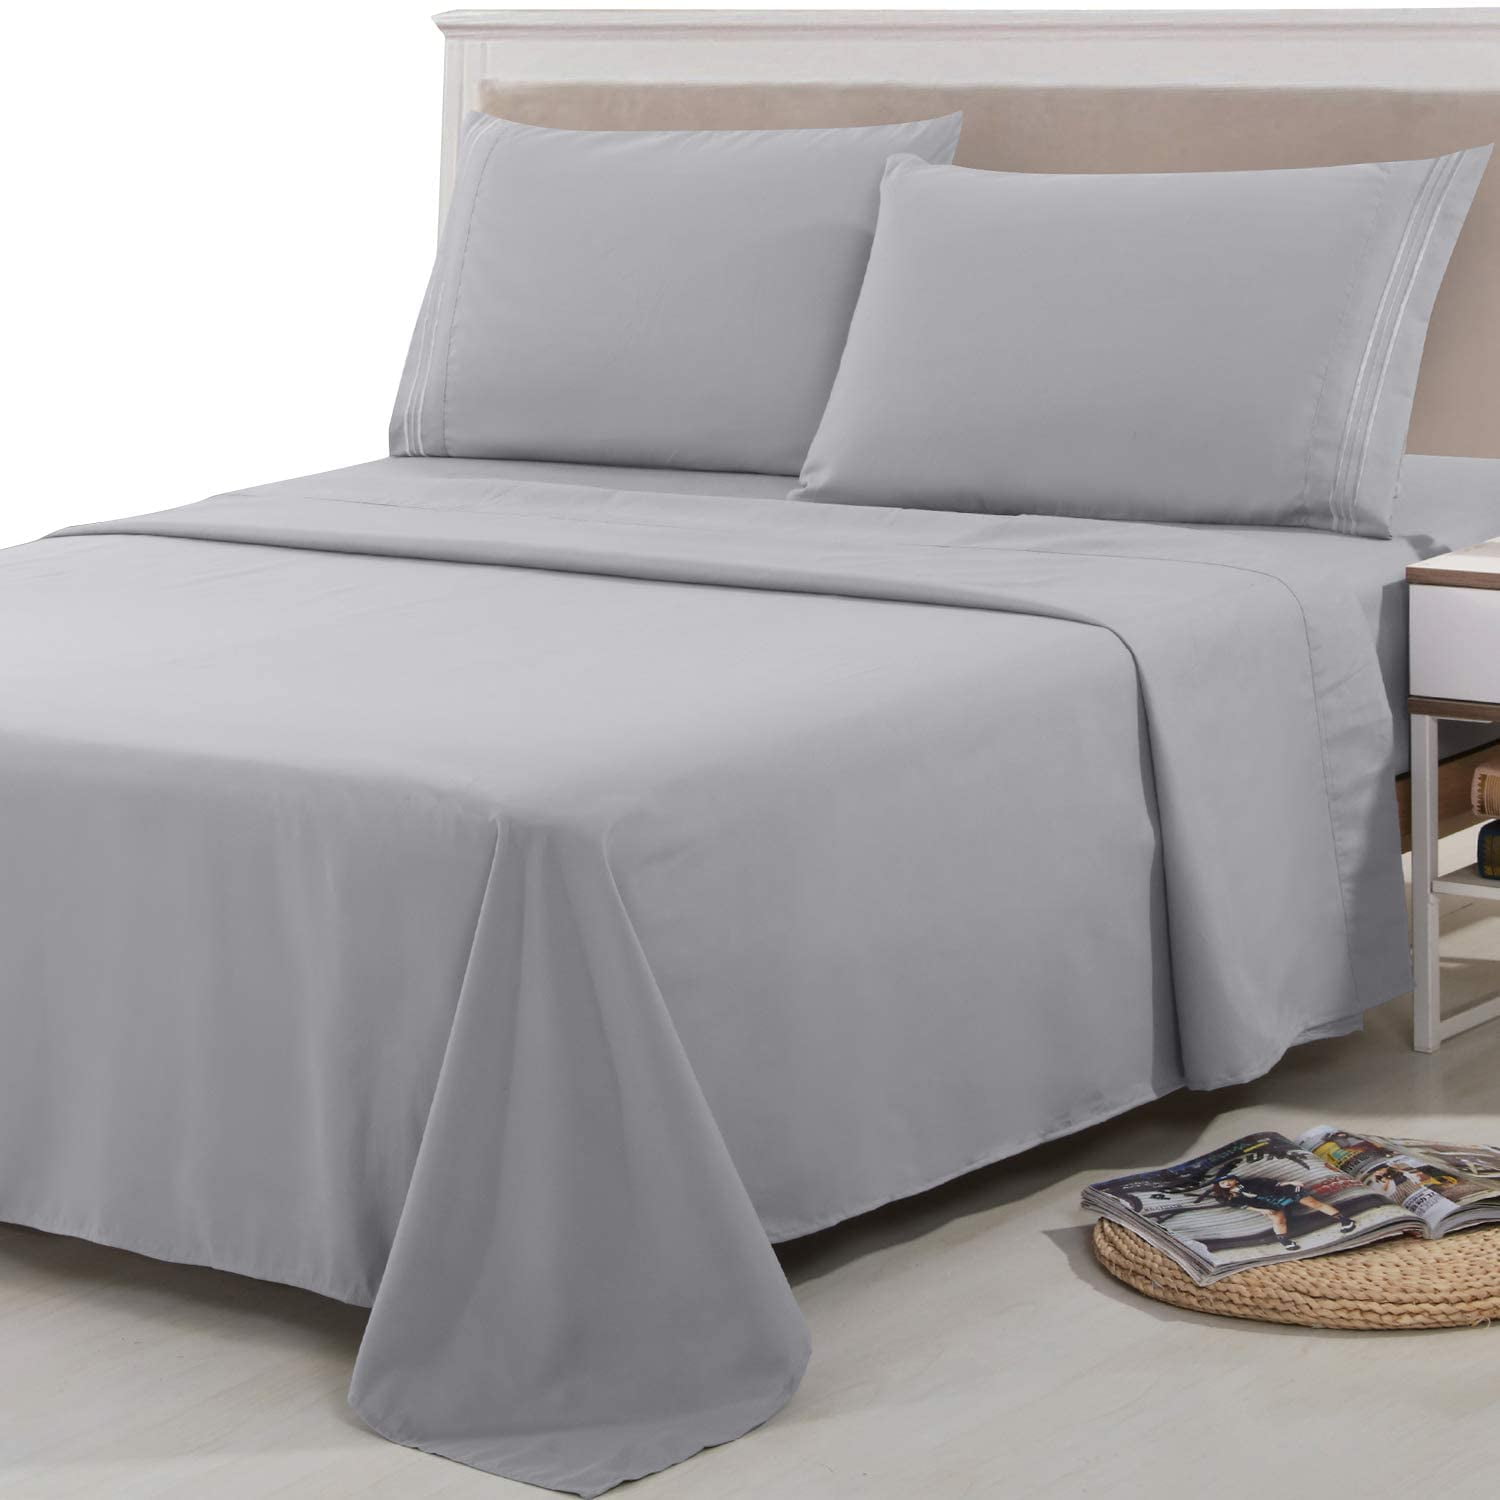 Hotel Luxury 3 PCs Set 1 Flat Top Sheet & 2 Pillow Case Cotton White Stripe